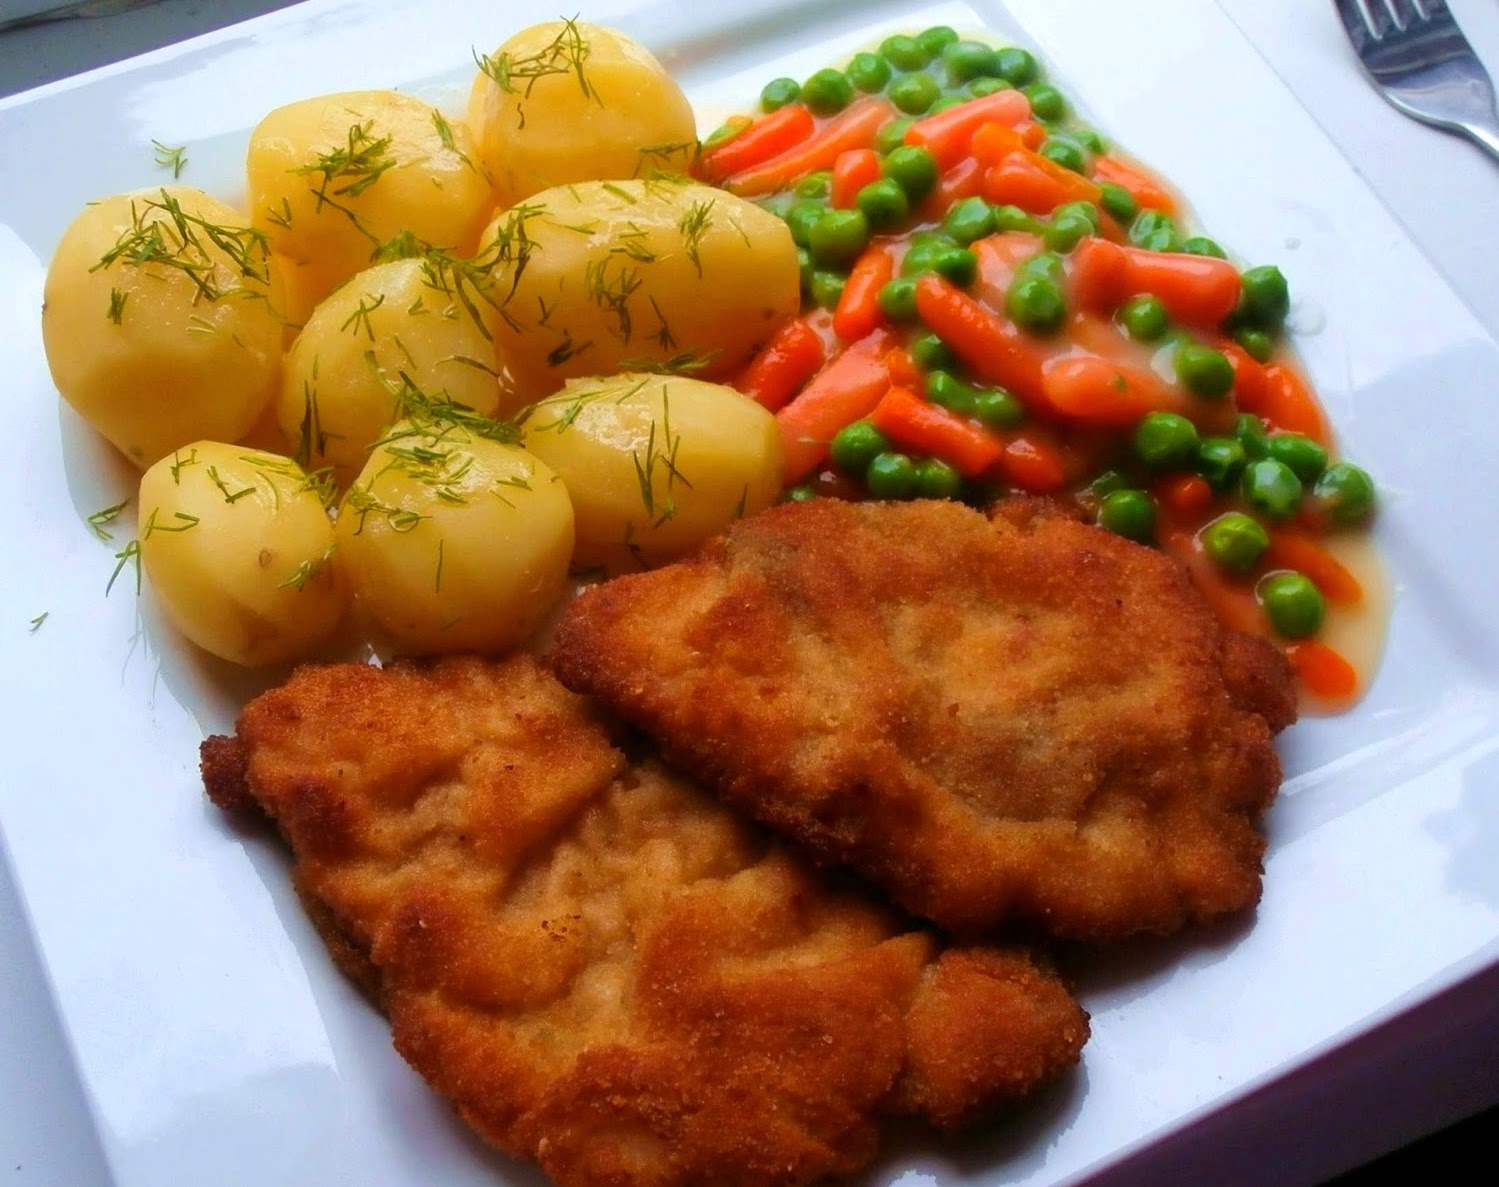 Kotlet Schabowy Recipe, Polish Breaded Pork Cutlets | Recipes Tab